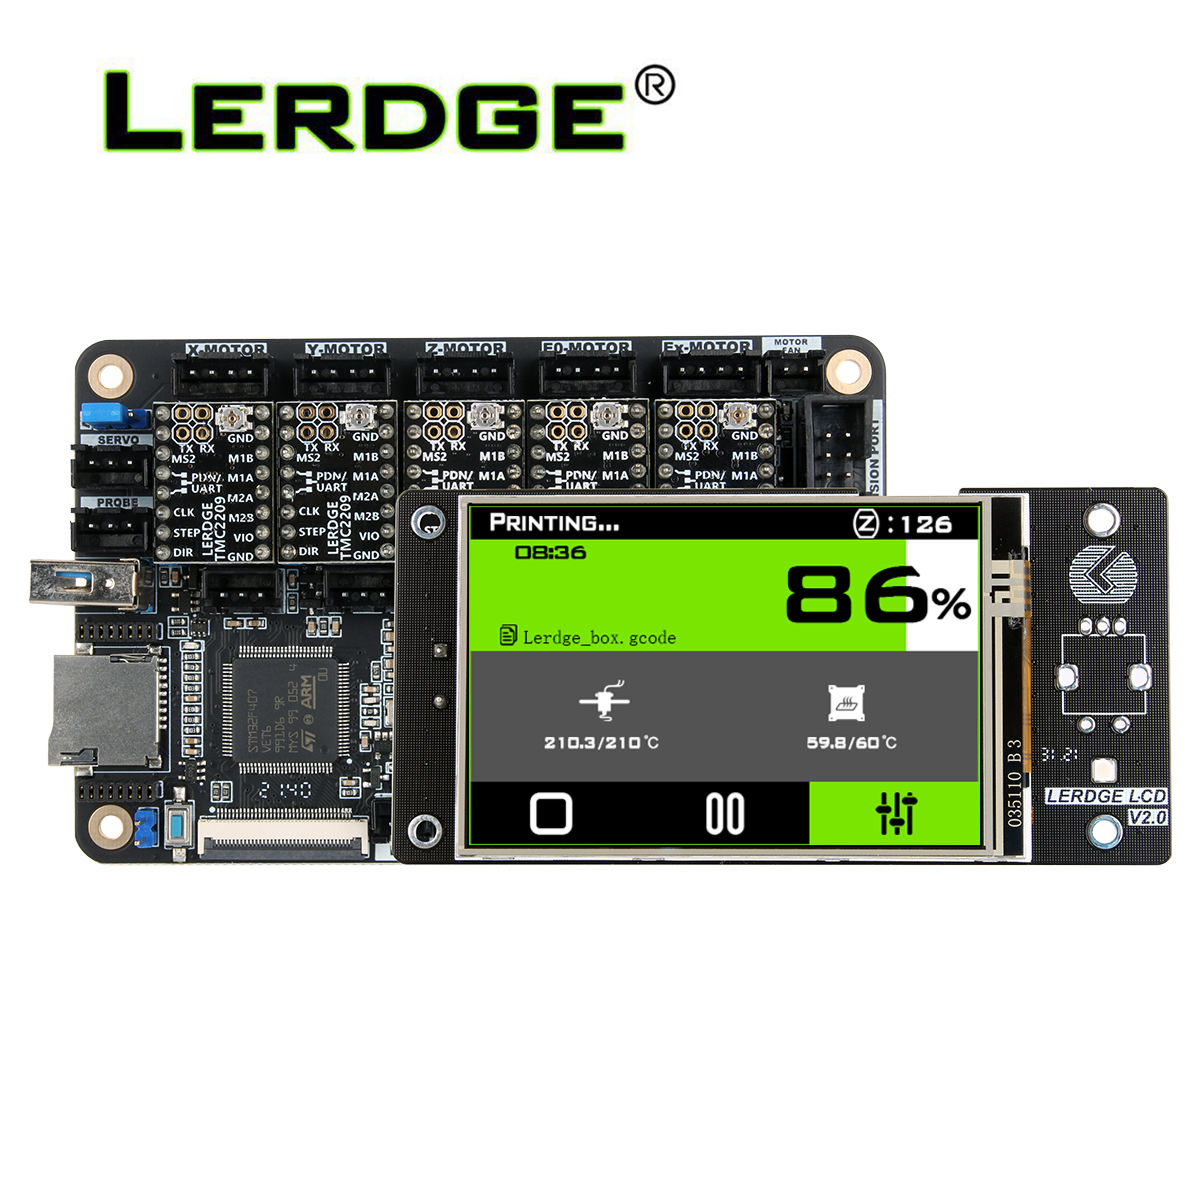 LERDGE Z Board Z2 kit - Lerdge Official Store